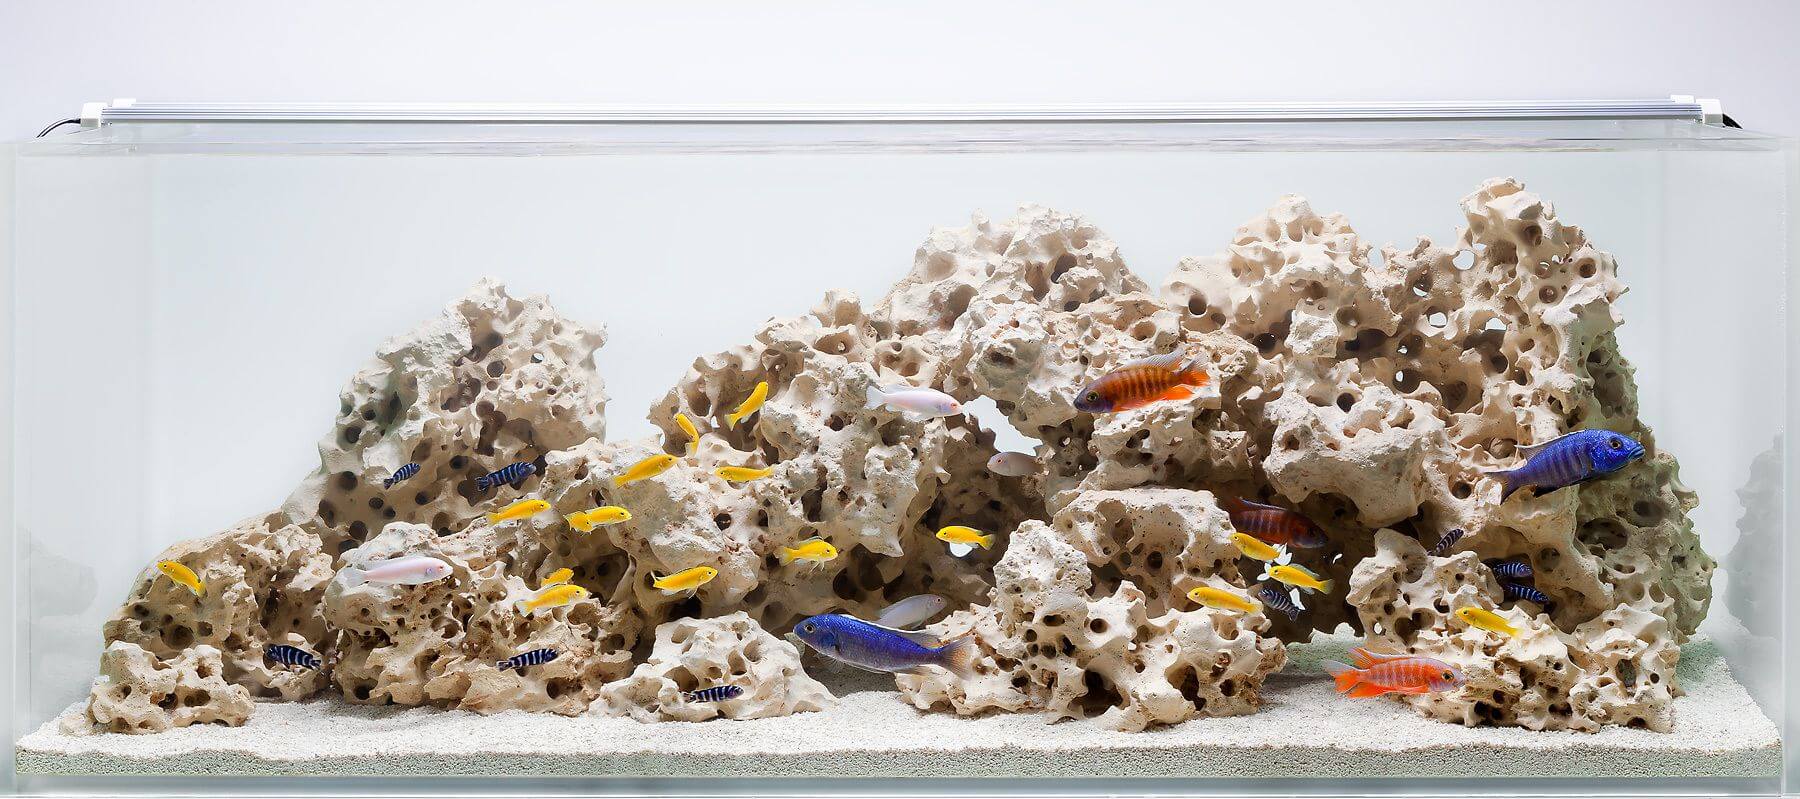 Fish tank designs: 5 ideas to appreciate life underwater : DesignWanted